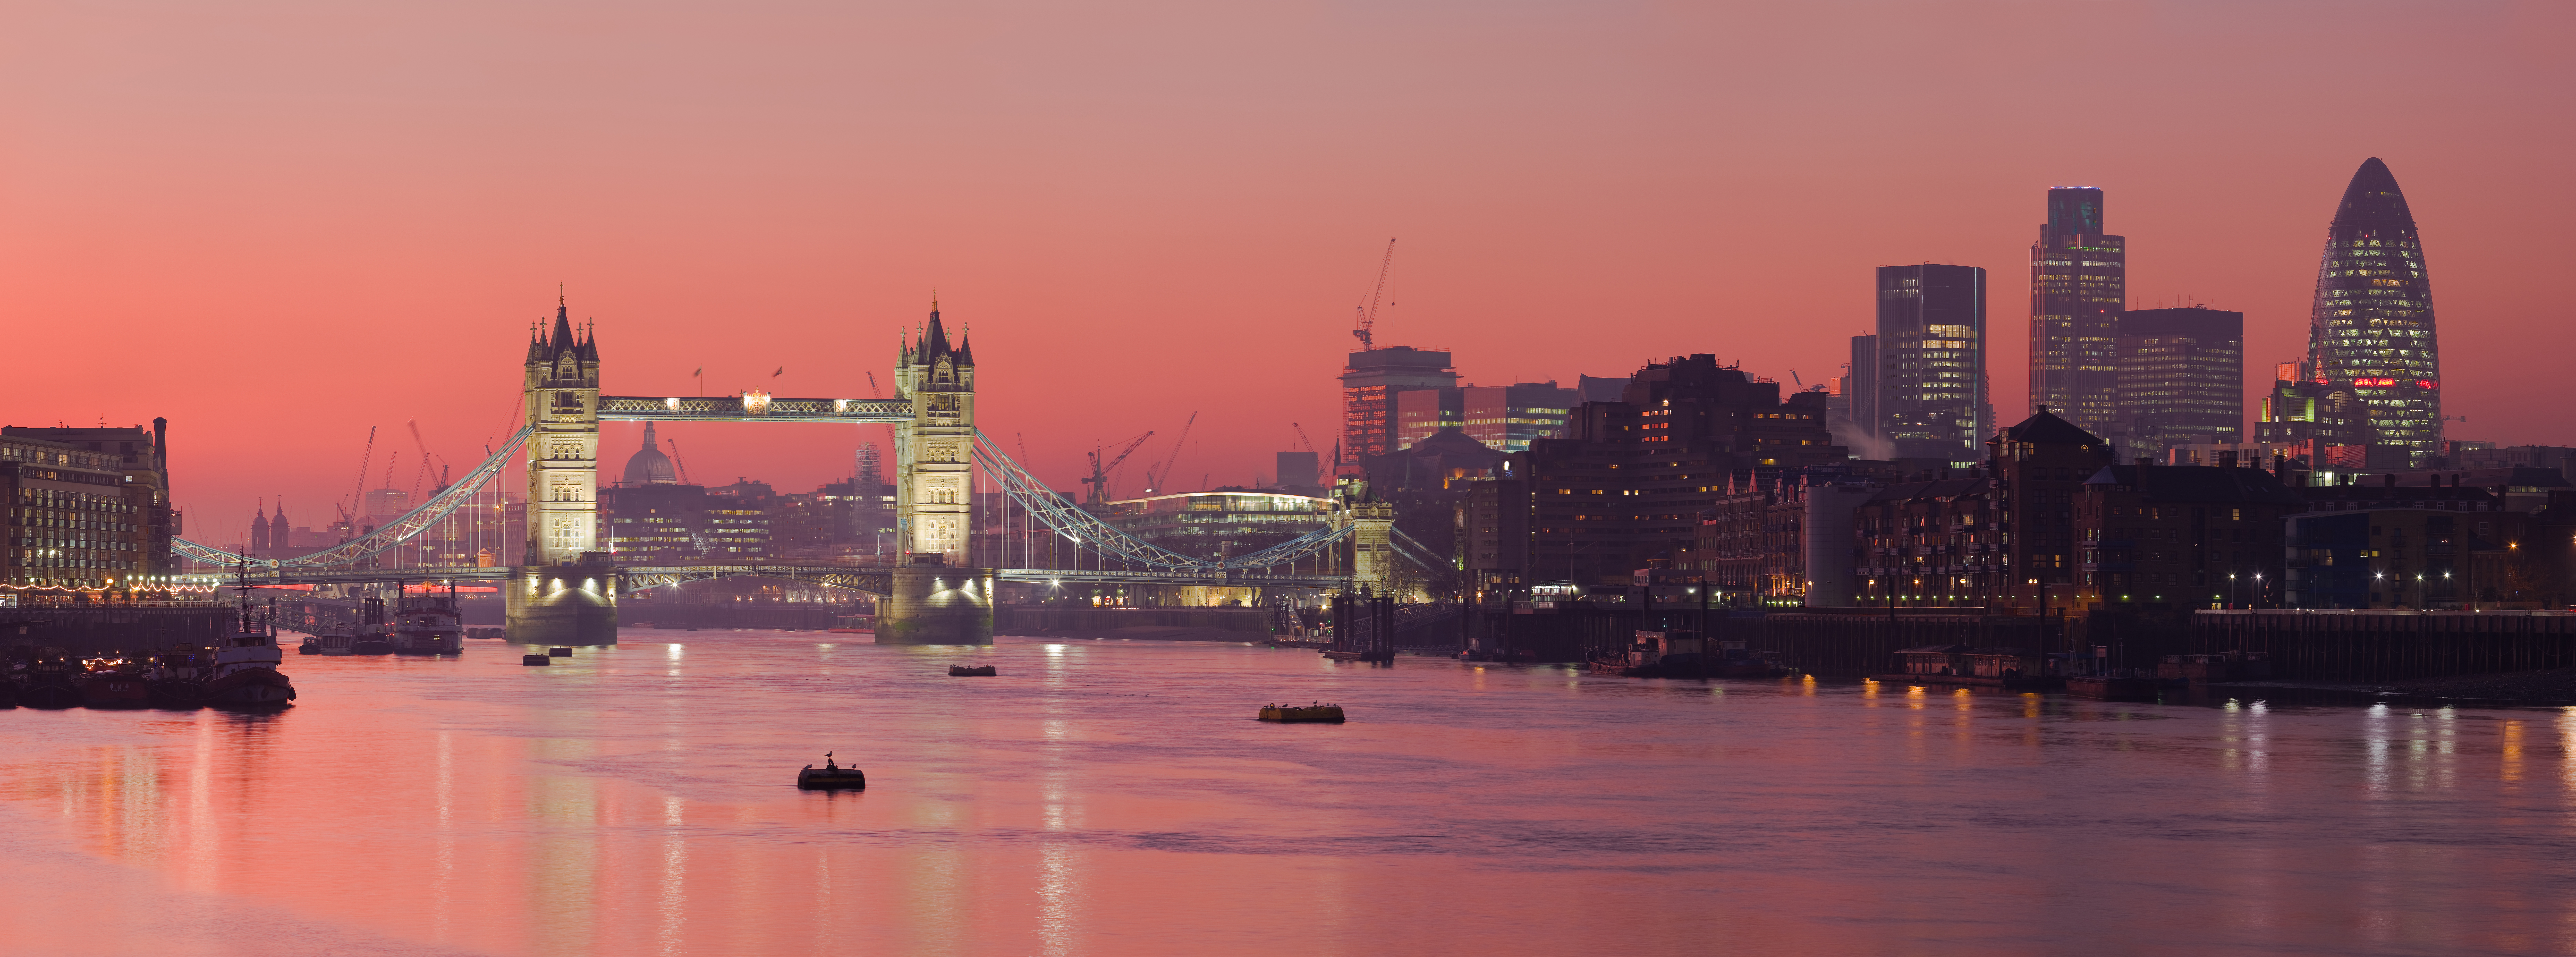 A multi segment panoramic image of the London ...